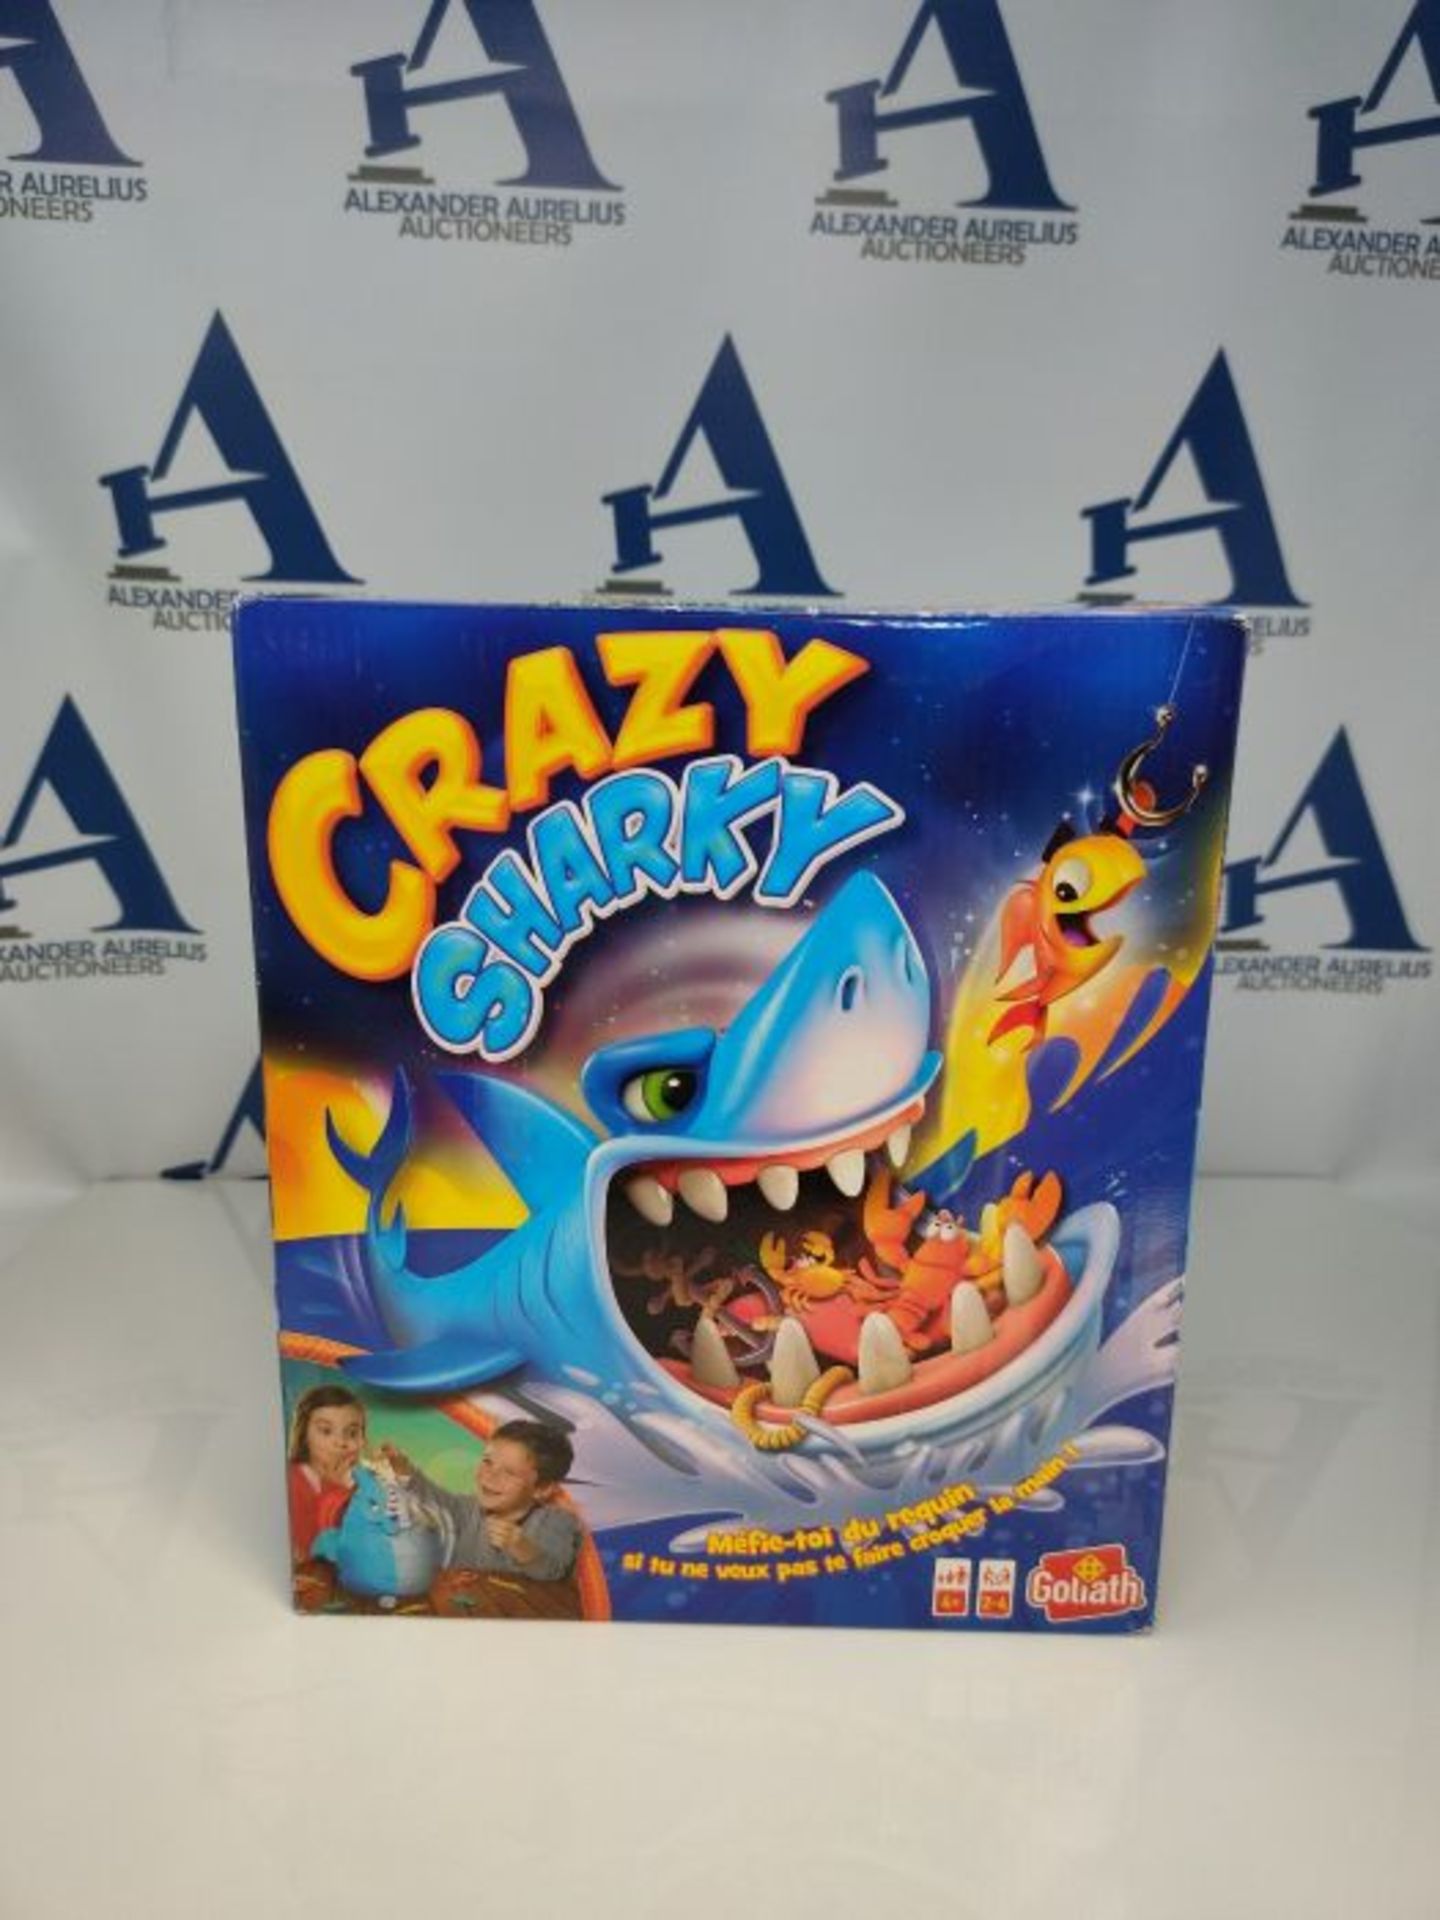 CRAZY SHARKY - Image 2 of 3